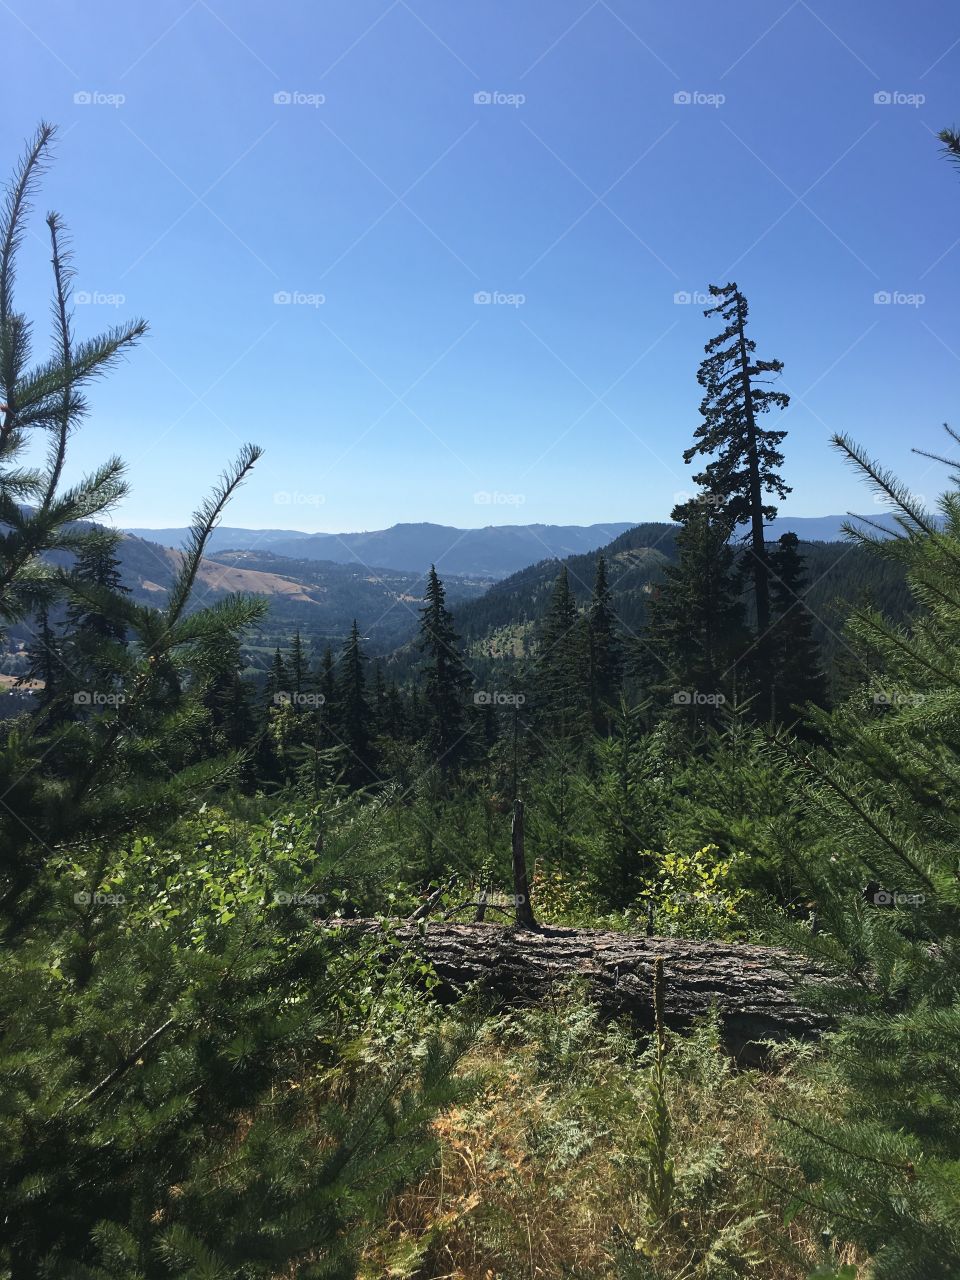 Washington scenery with pine trees